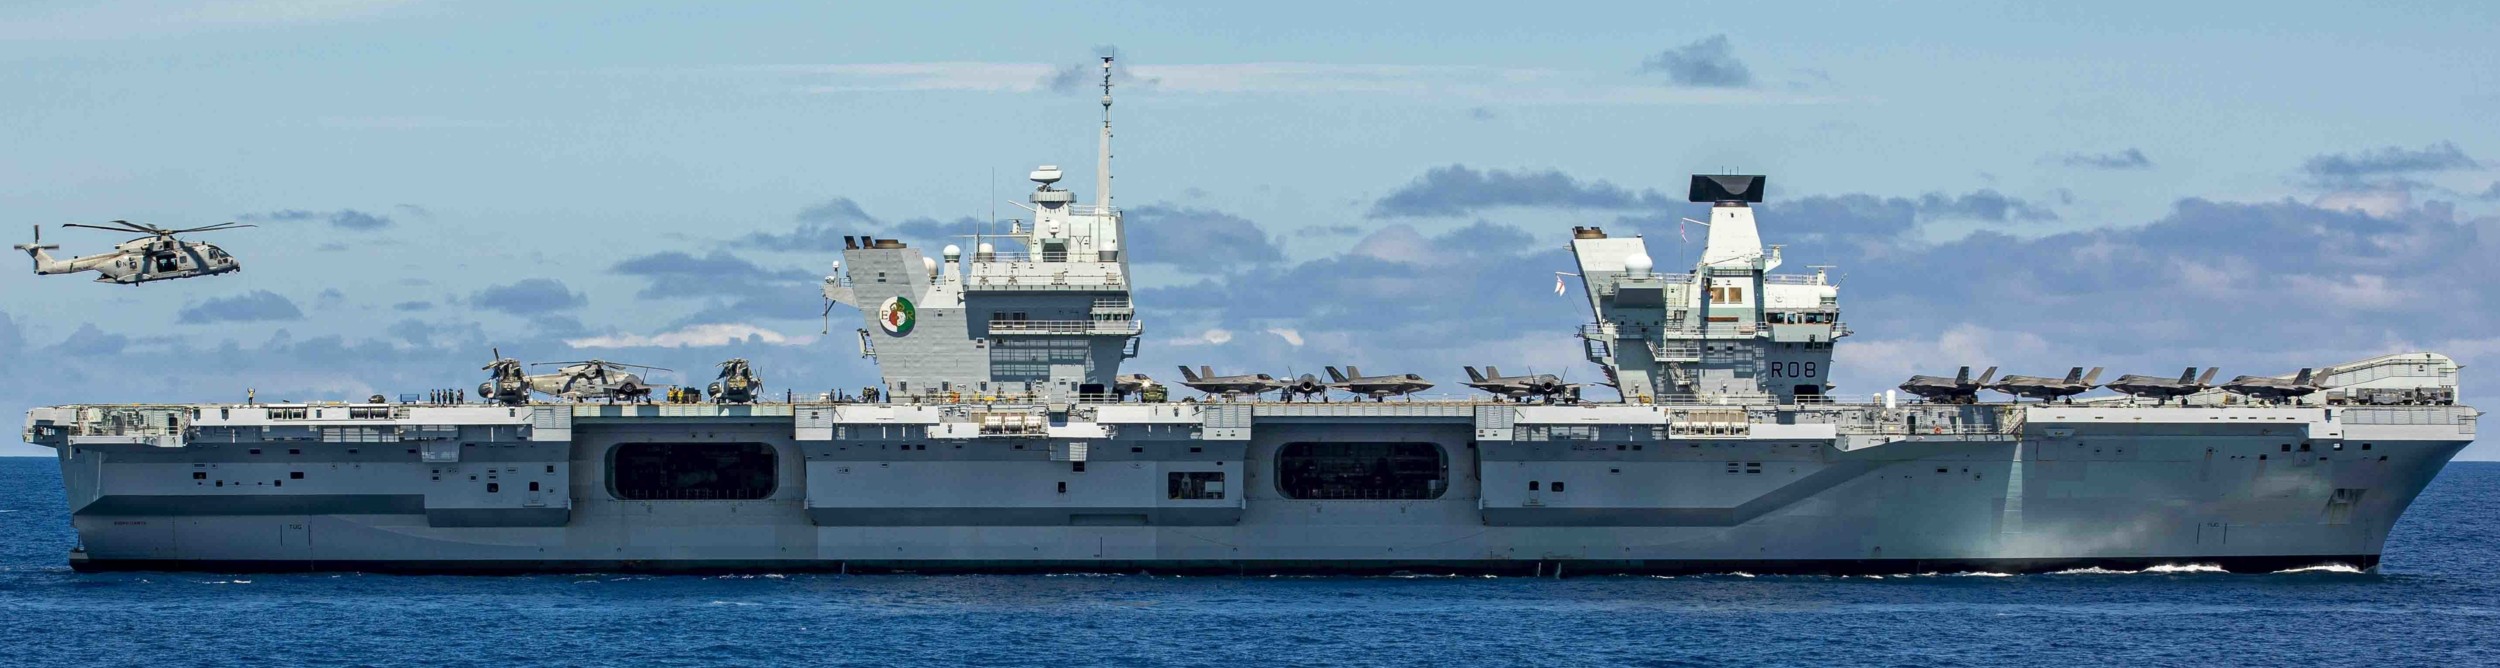 queen elizabeth class aircraft carrier stovl royal navy 129c